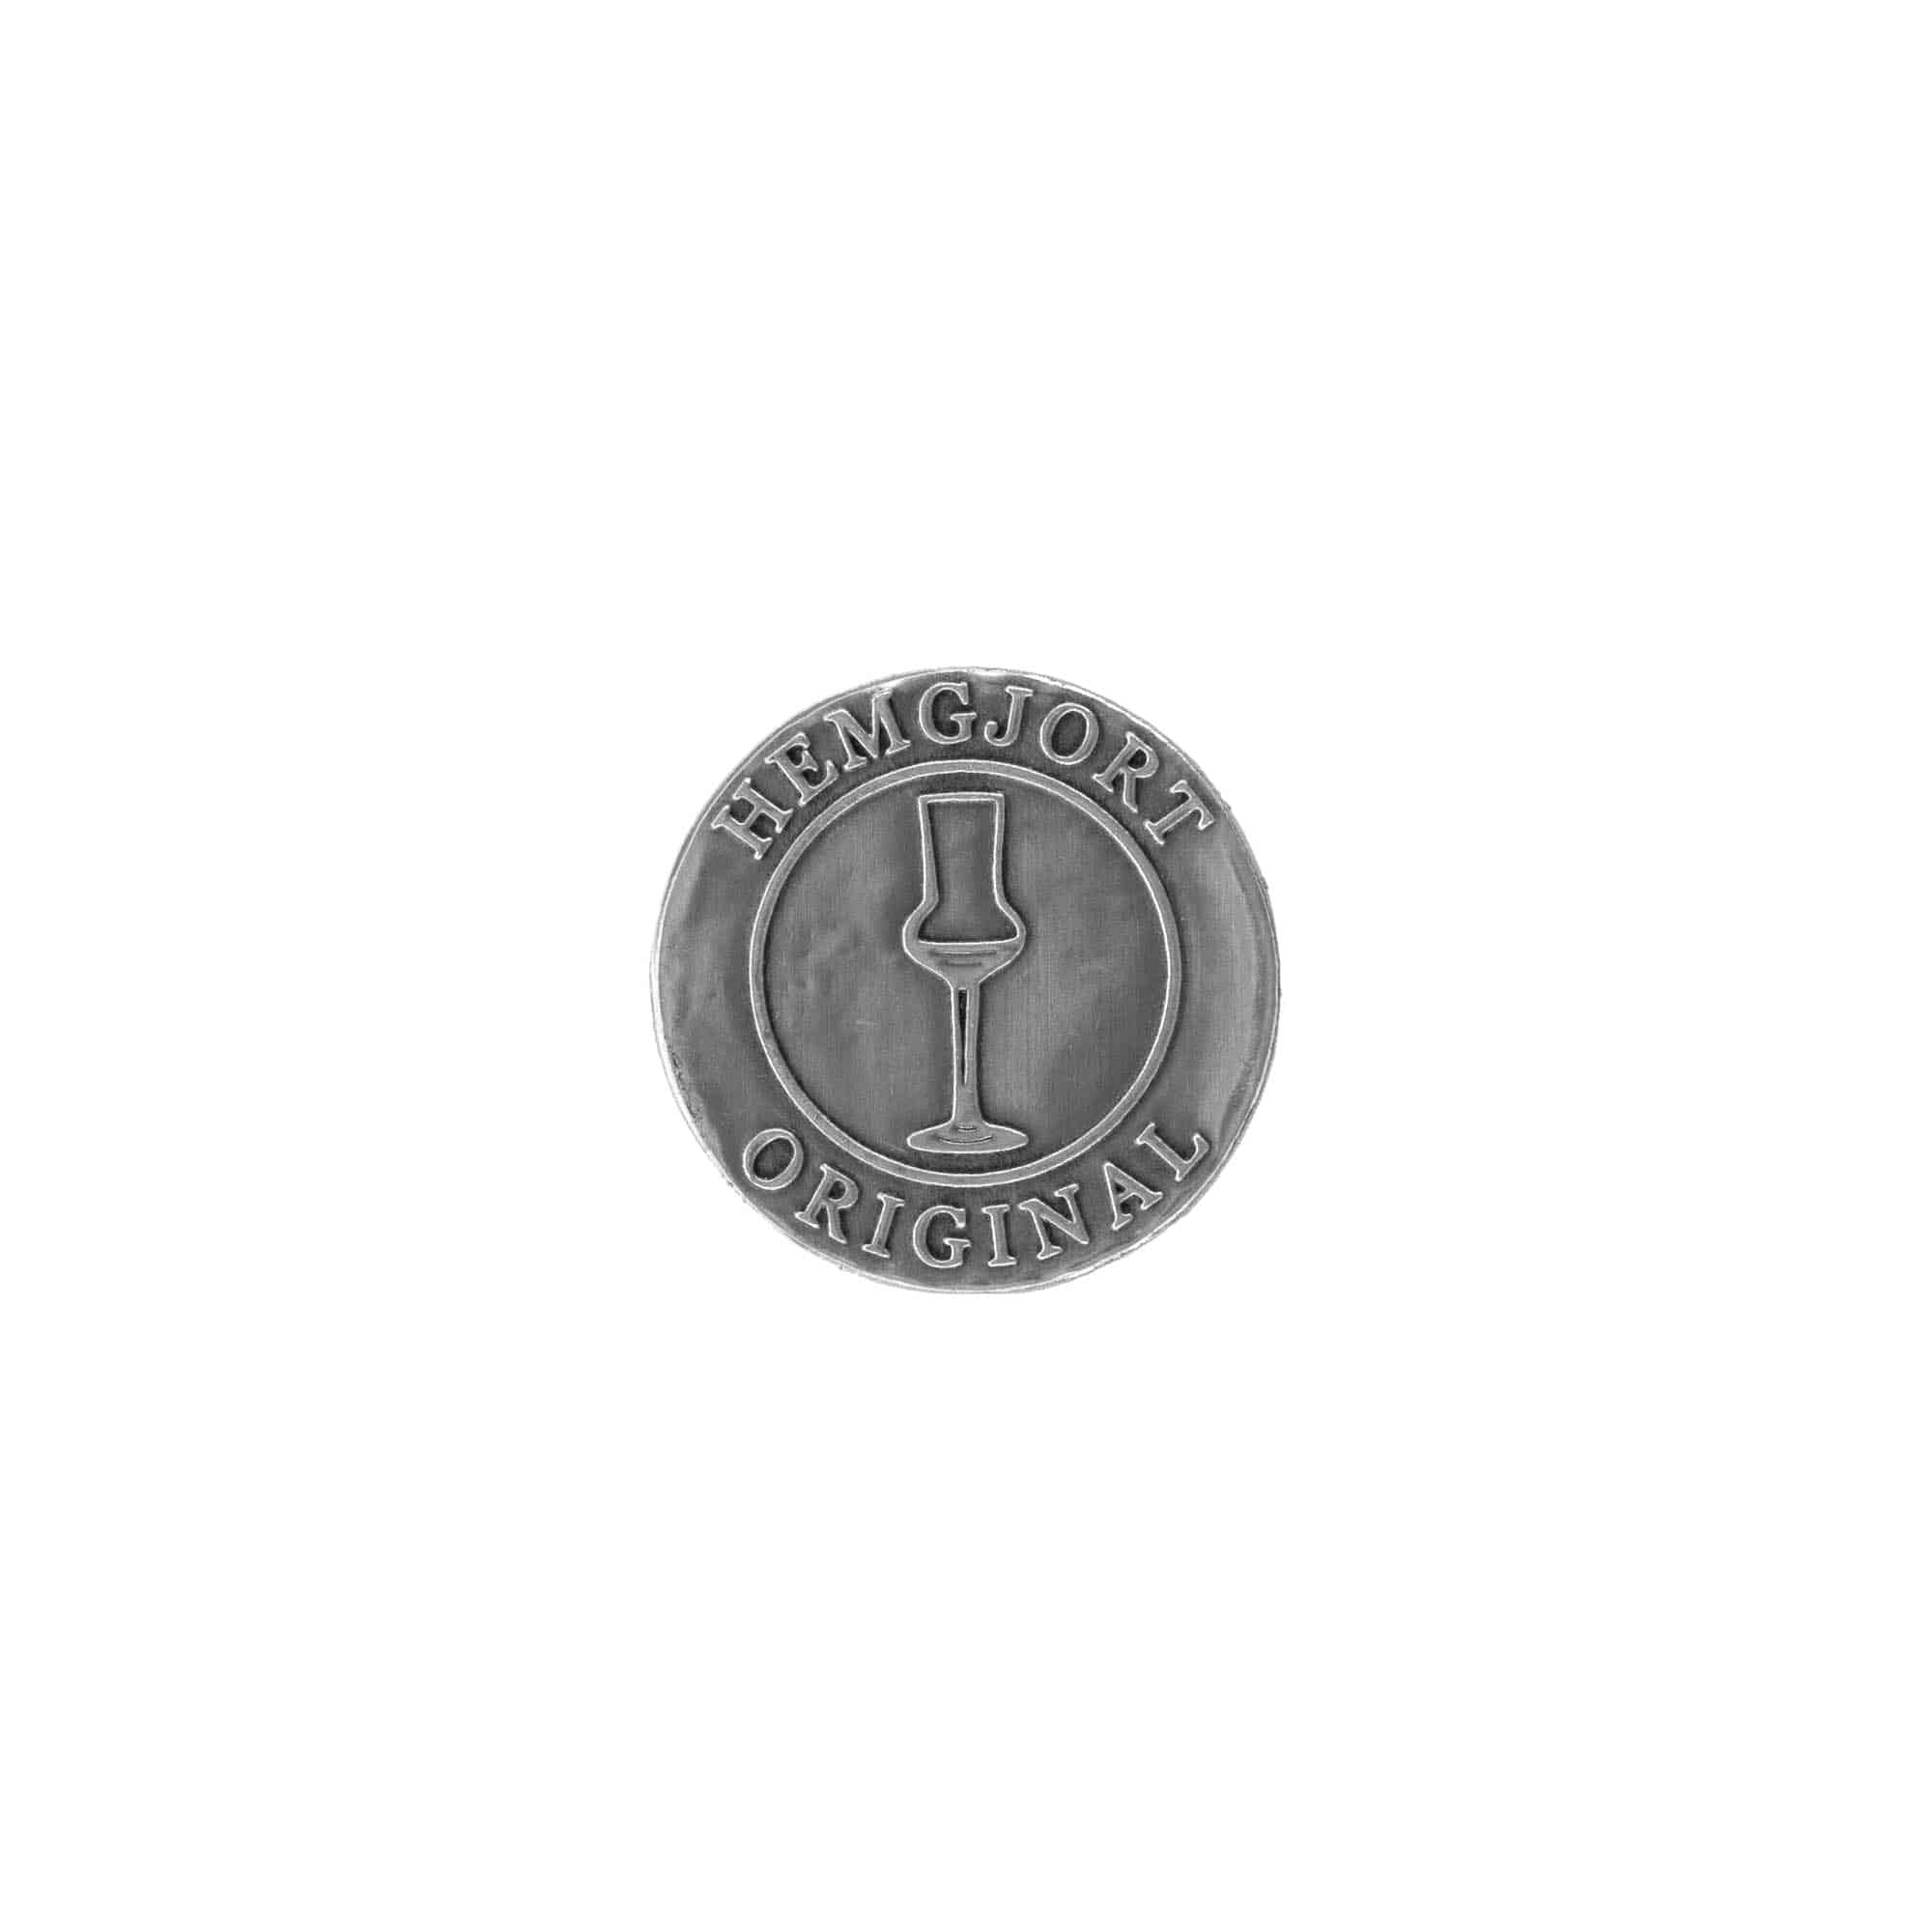 Pewter tag 'Hemgjort Original', round, metal, silver